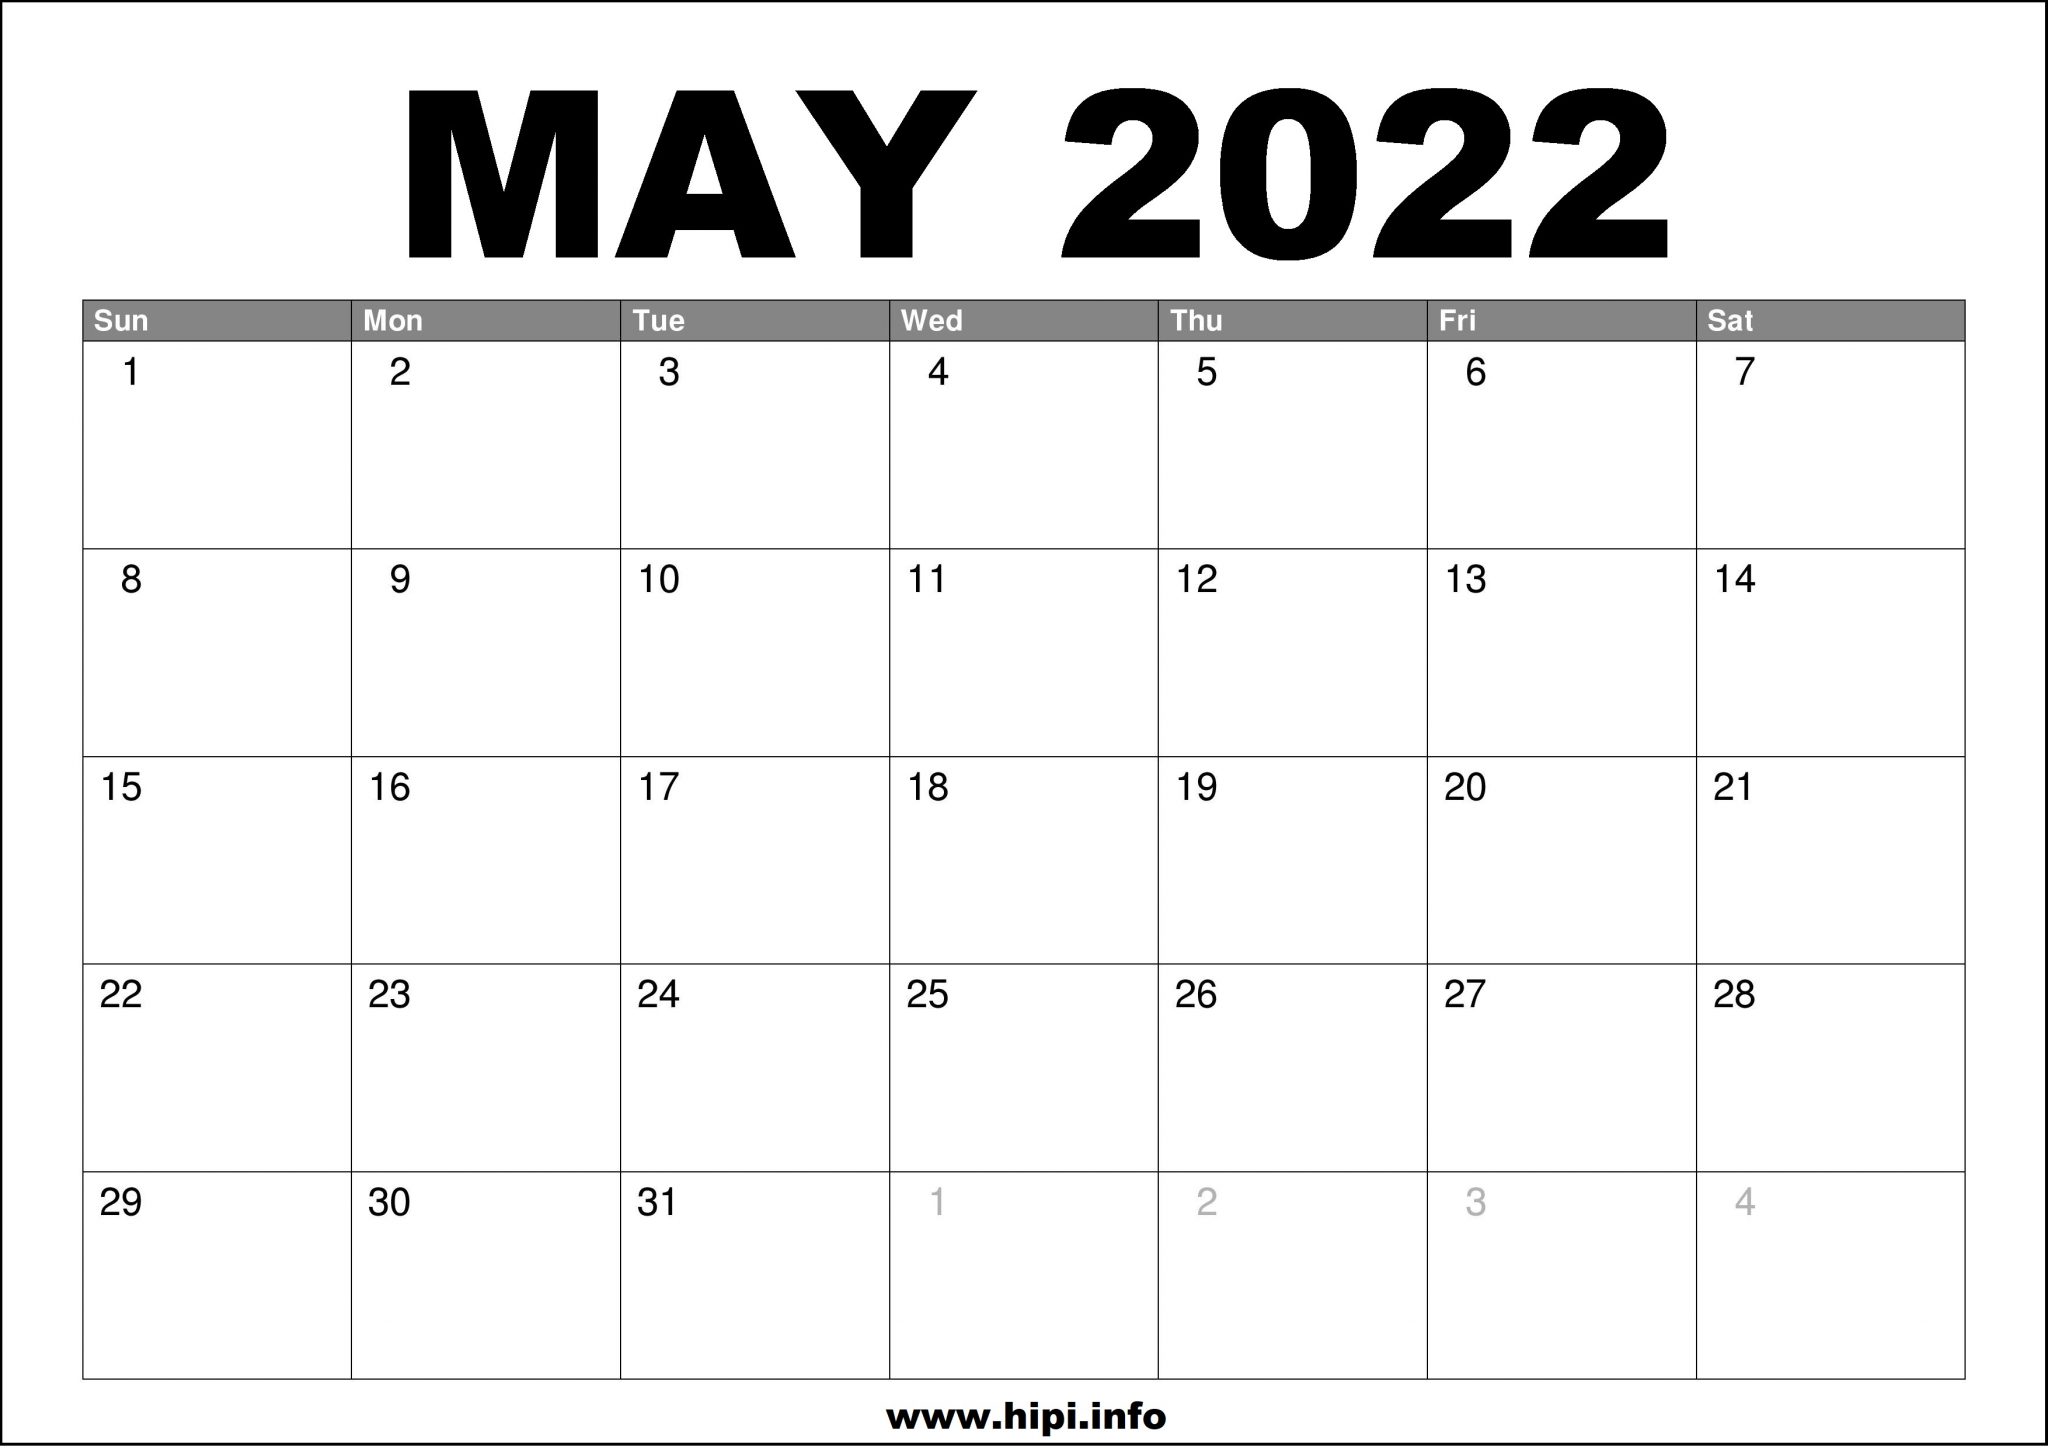 May 2022 Calendar Printable Free - Hipi.info